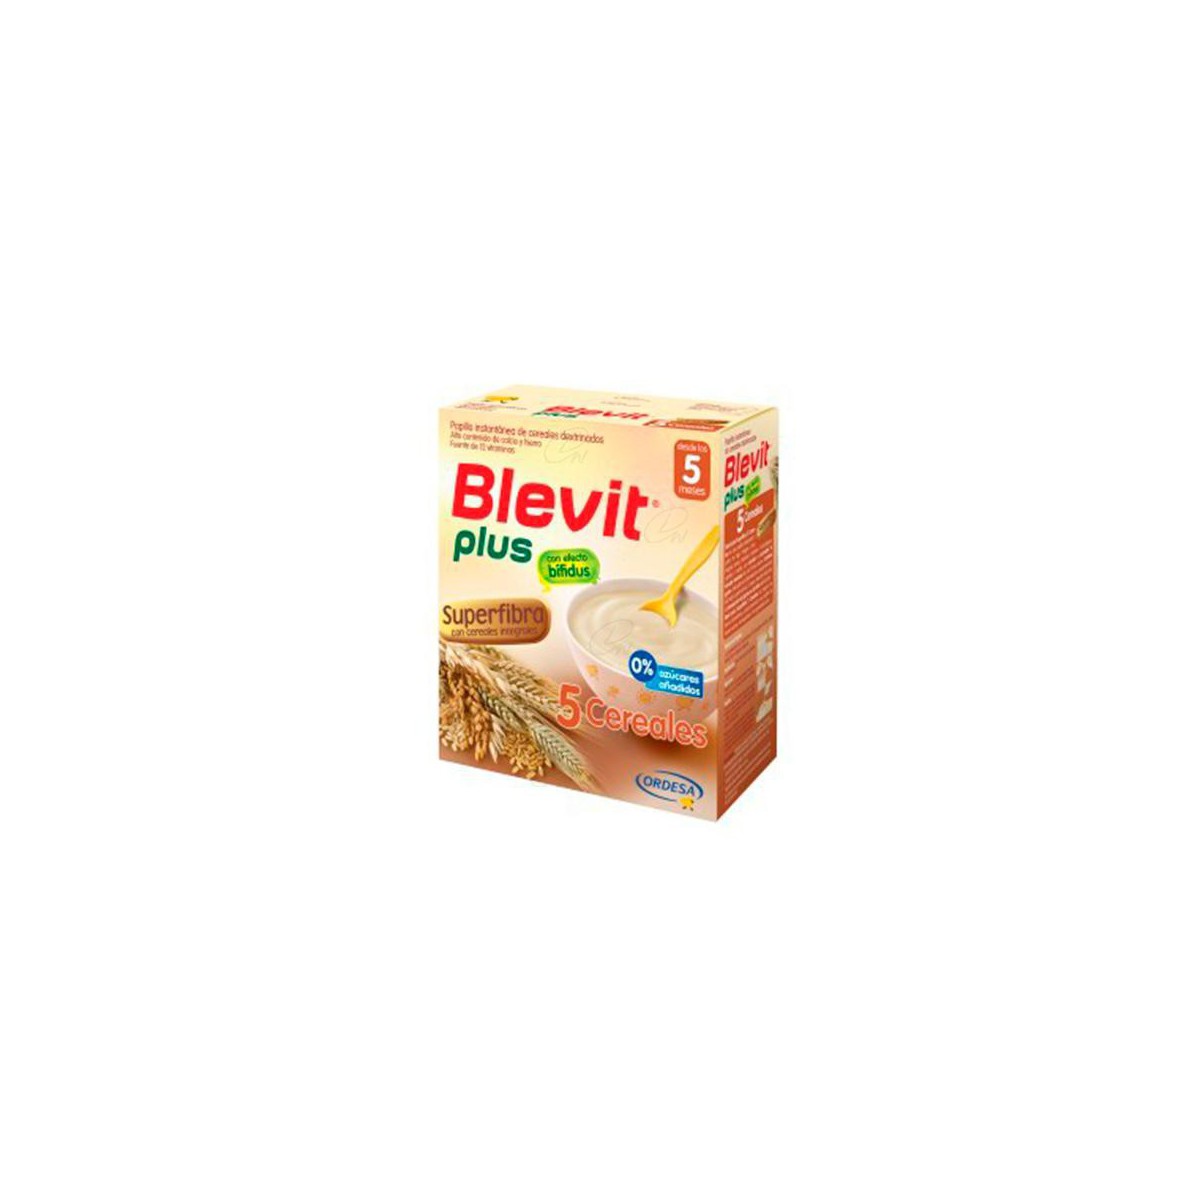 Blevit Plus Superfibra 5 Cereales 600 g